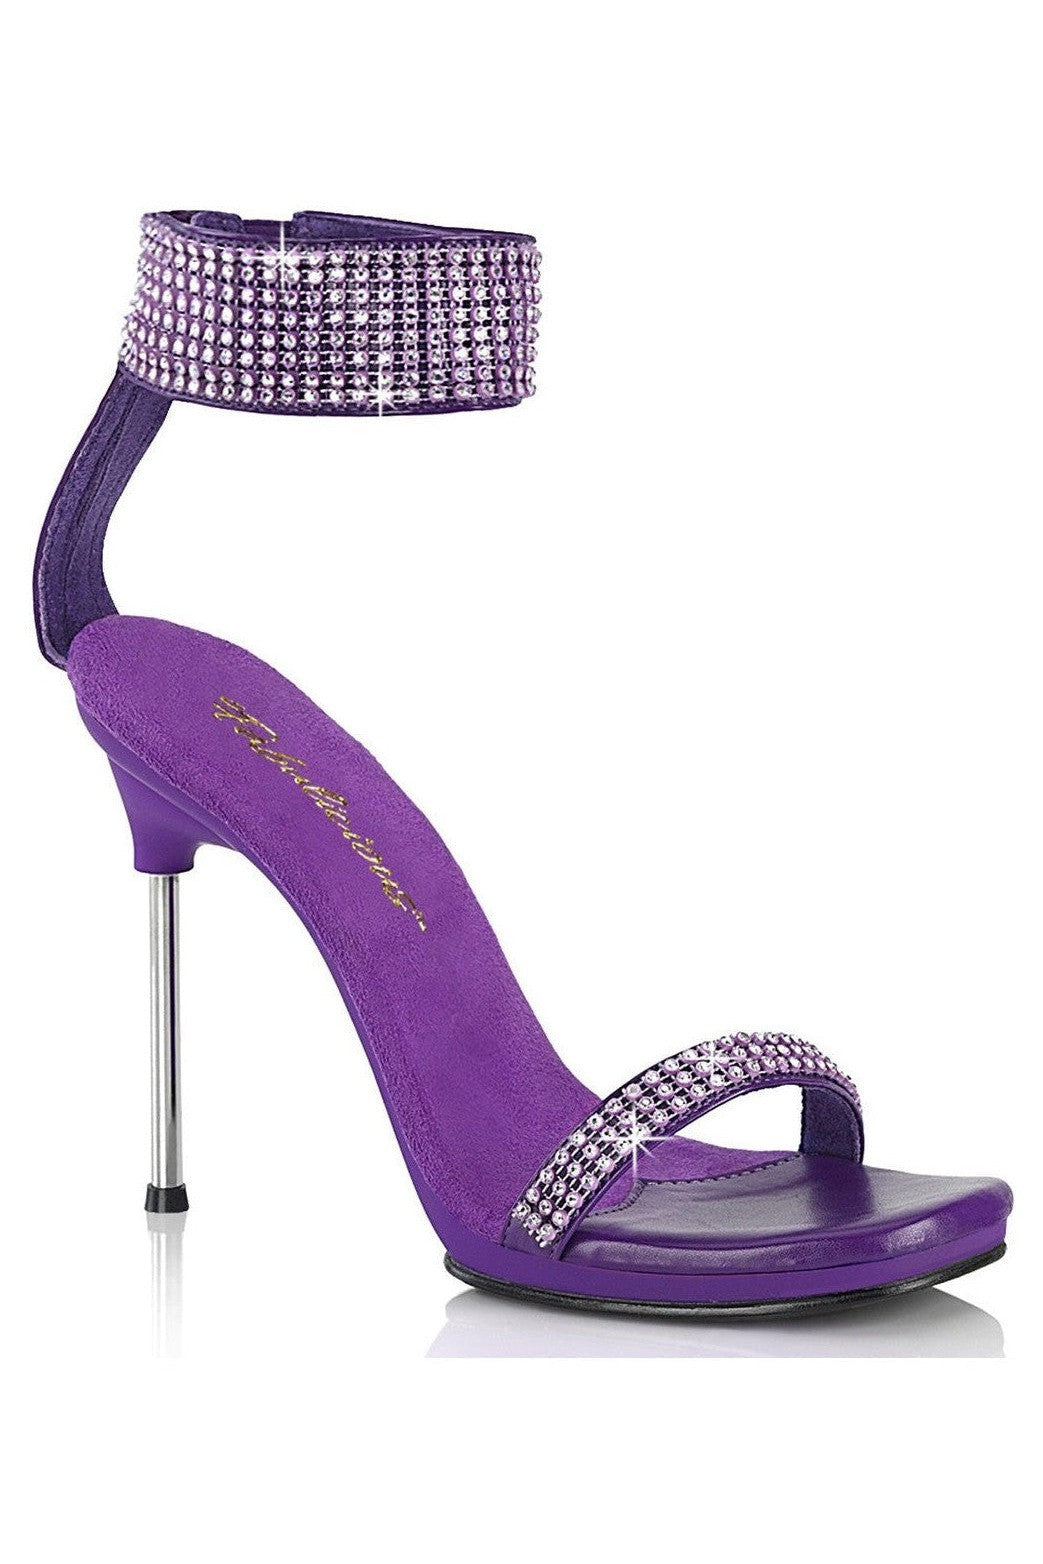 Fabulicious Purple Sandals Platform Stripper Shoes | Buy at Sexyshoes.com